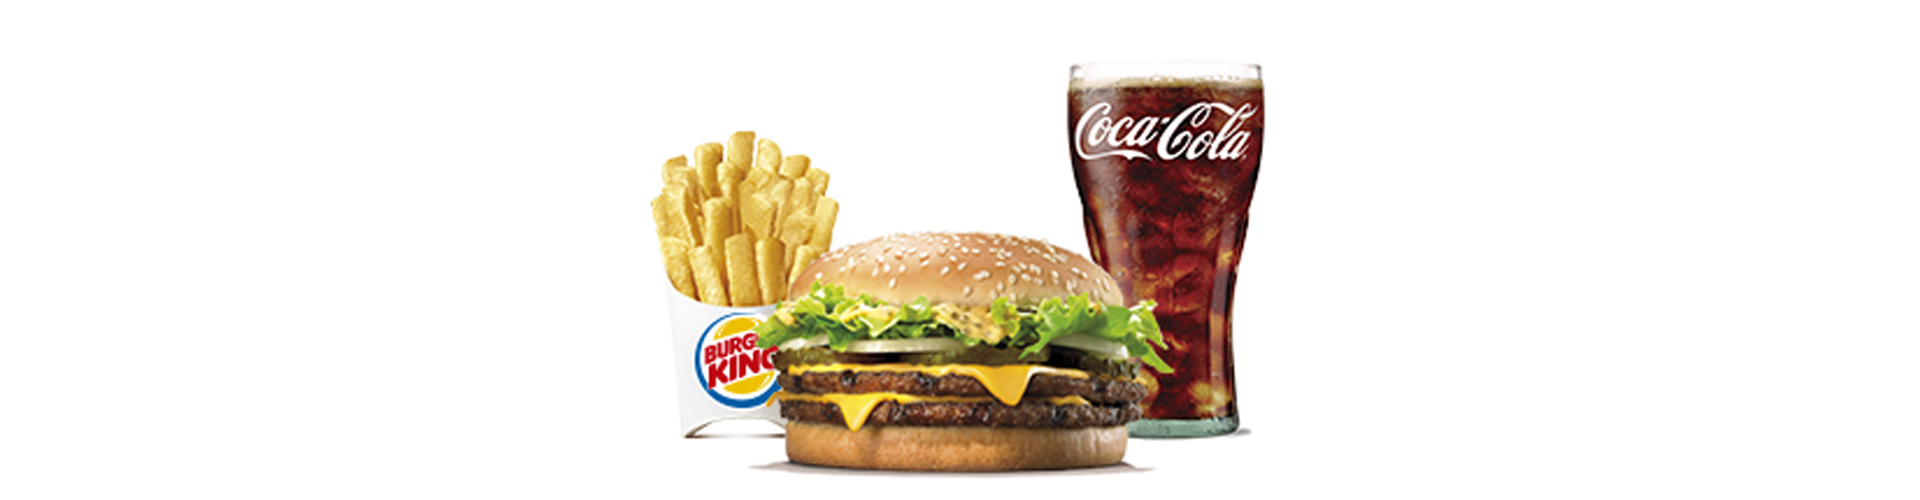 menu-big-king-burgerking-40001712-cocacola-zero-aros